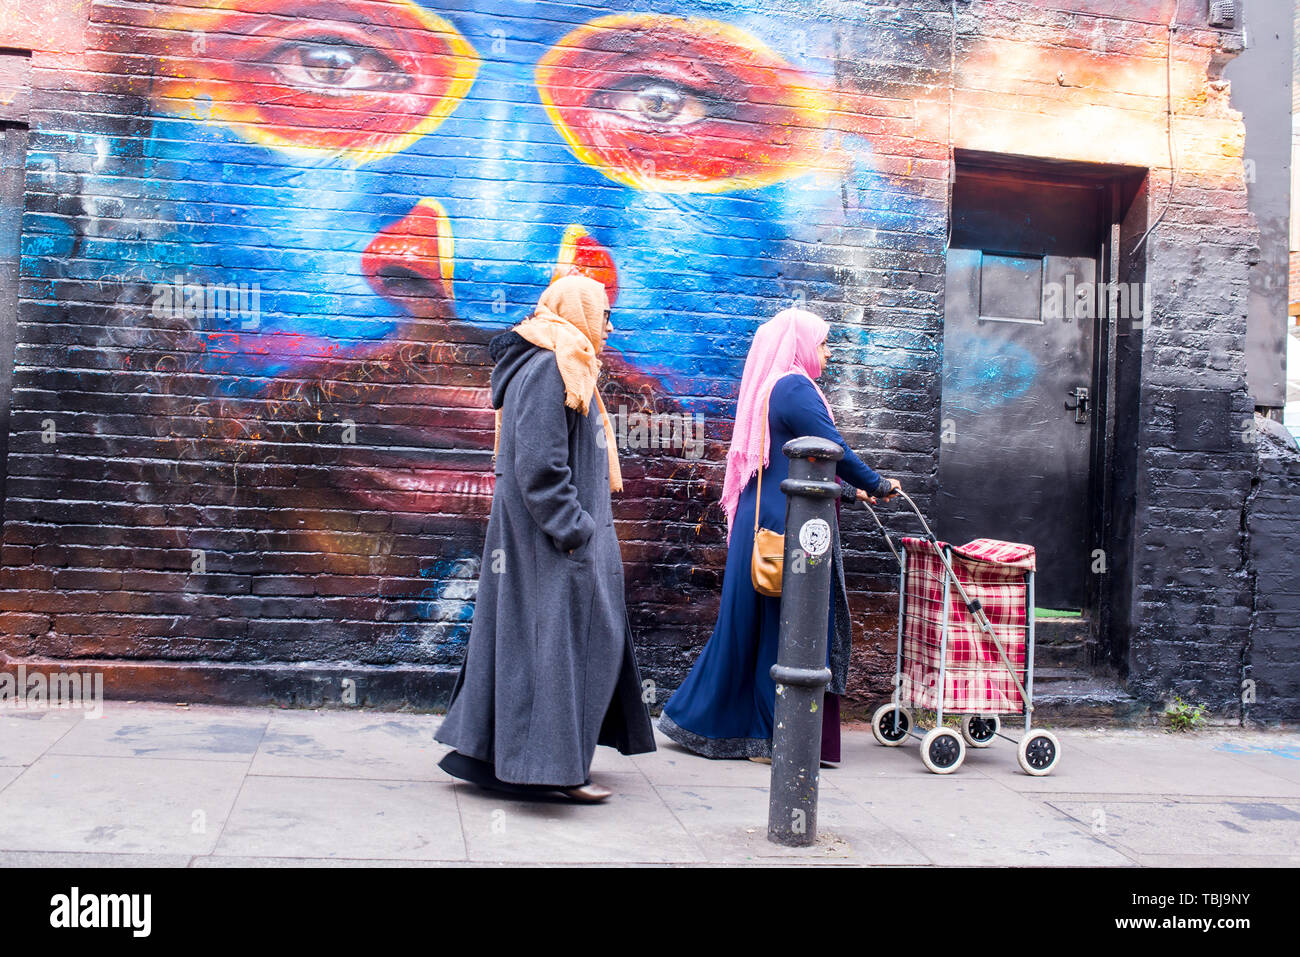 Brick Lane, Shoreditch, London, England, UK - April 2019: Two Indian women wearing hijabs walking in Brick lane next to a wall covered in graffiti mur Stock Photo